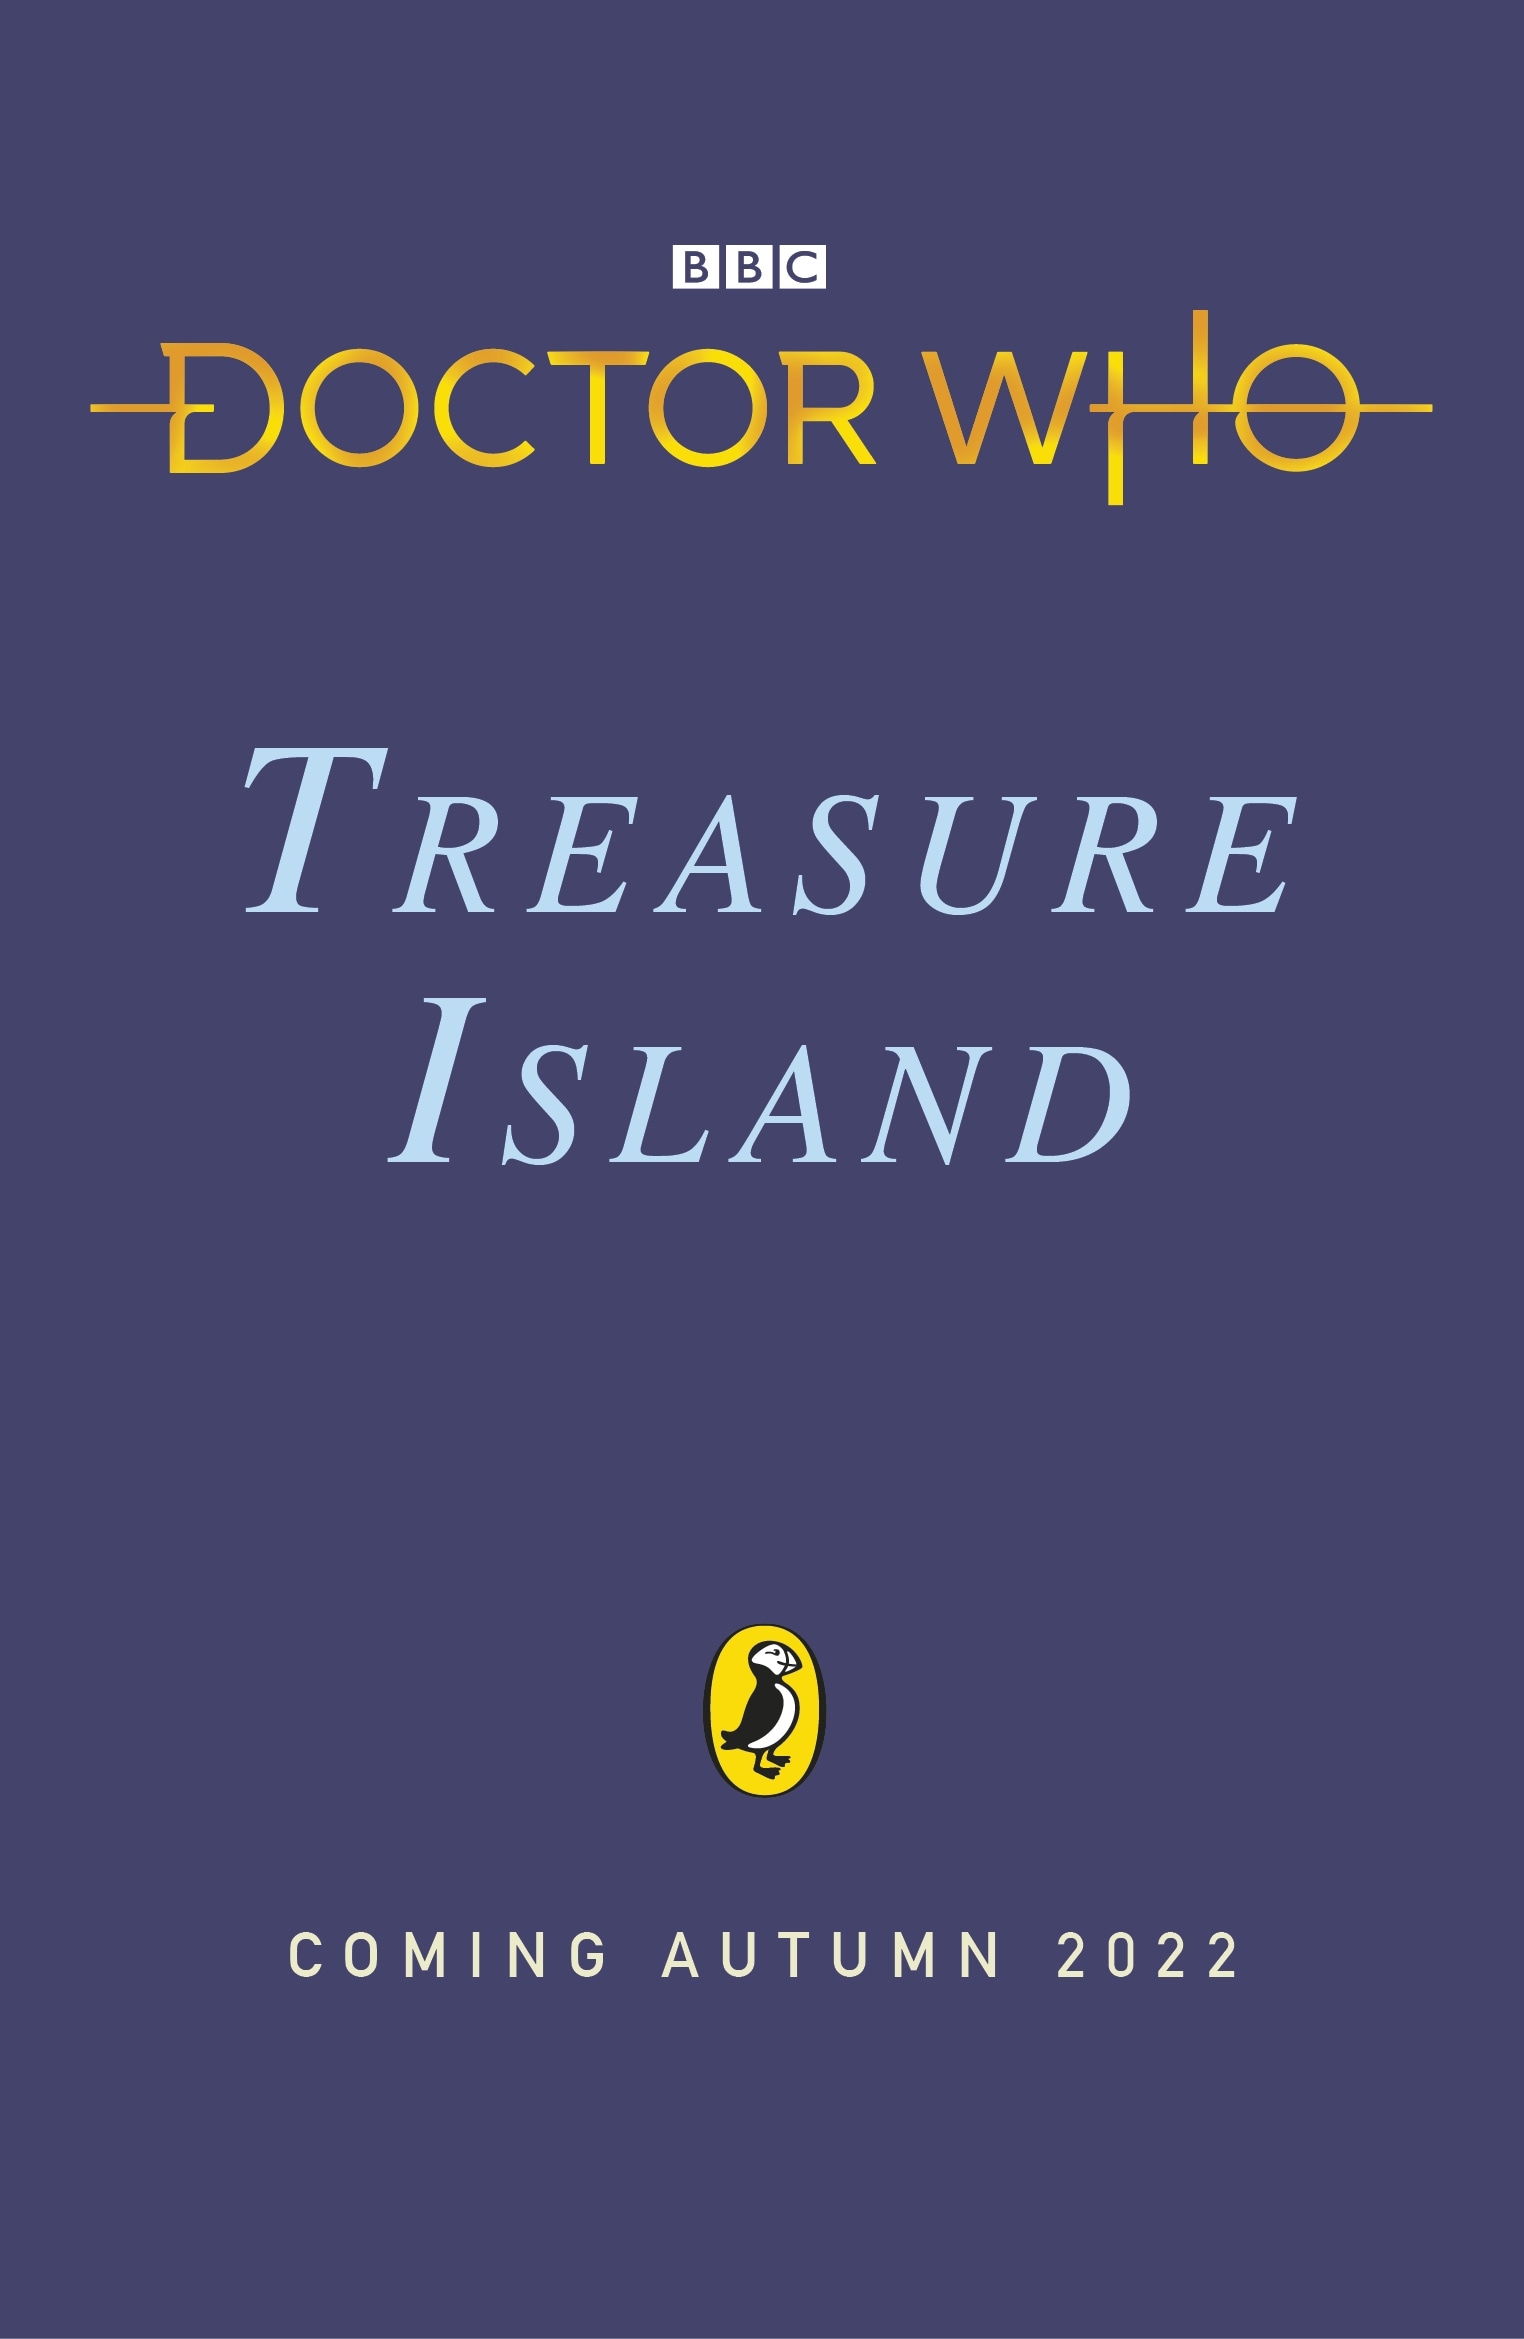 Doctor Who: Treasure Island